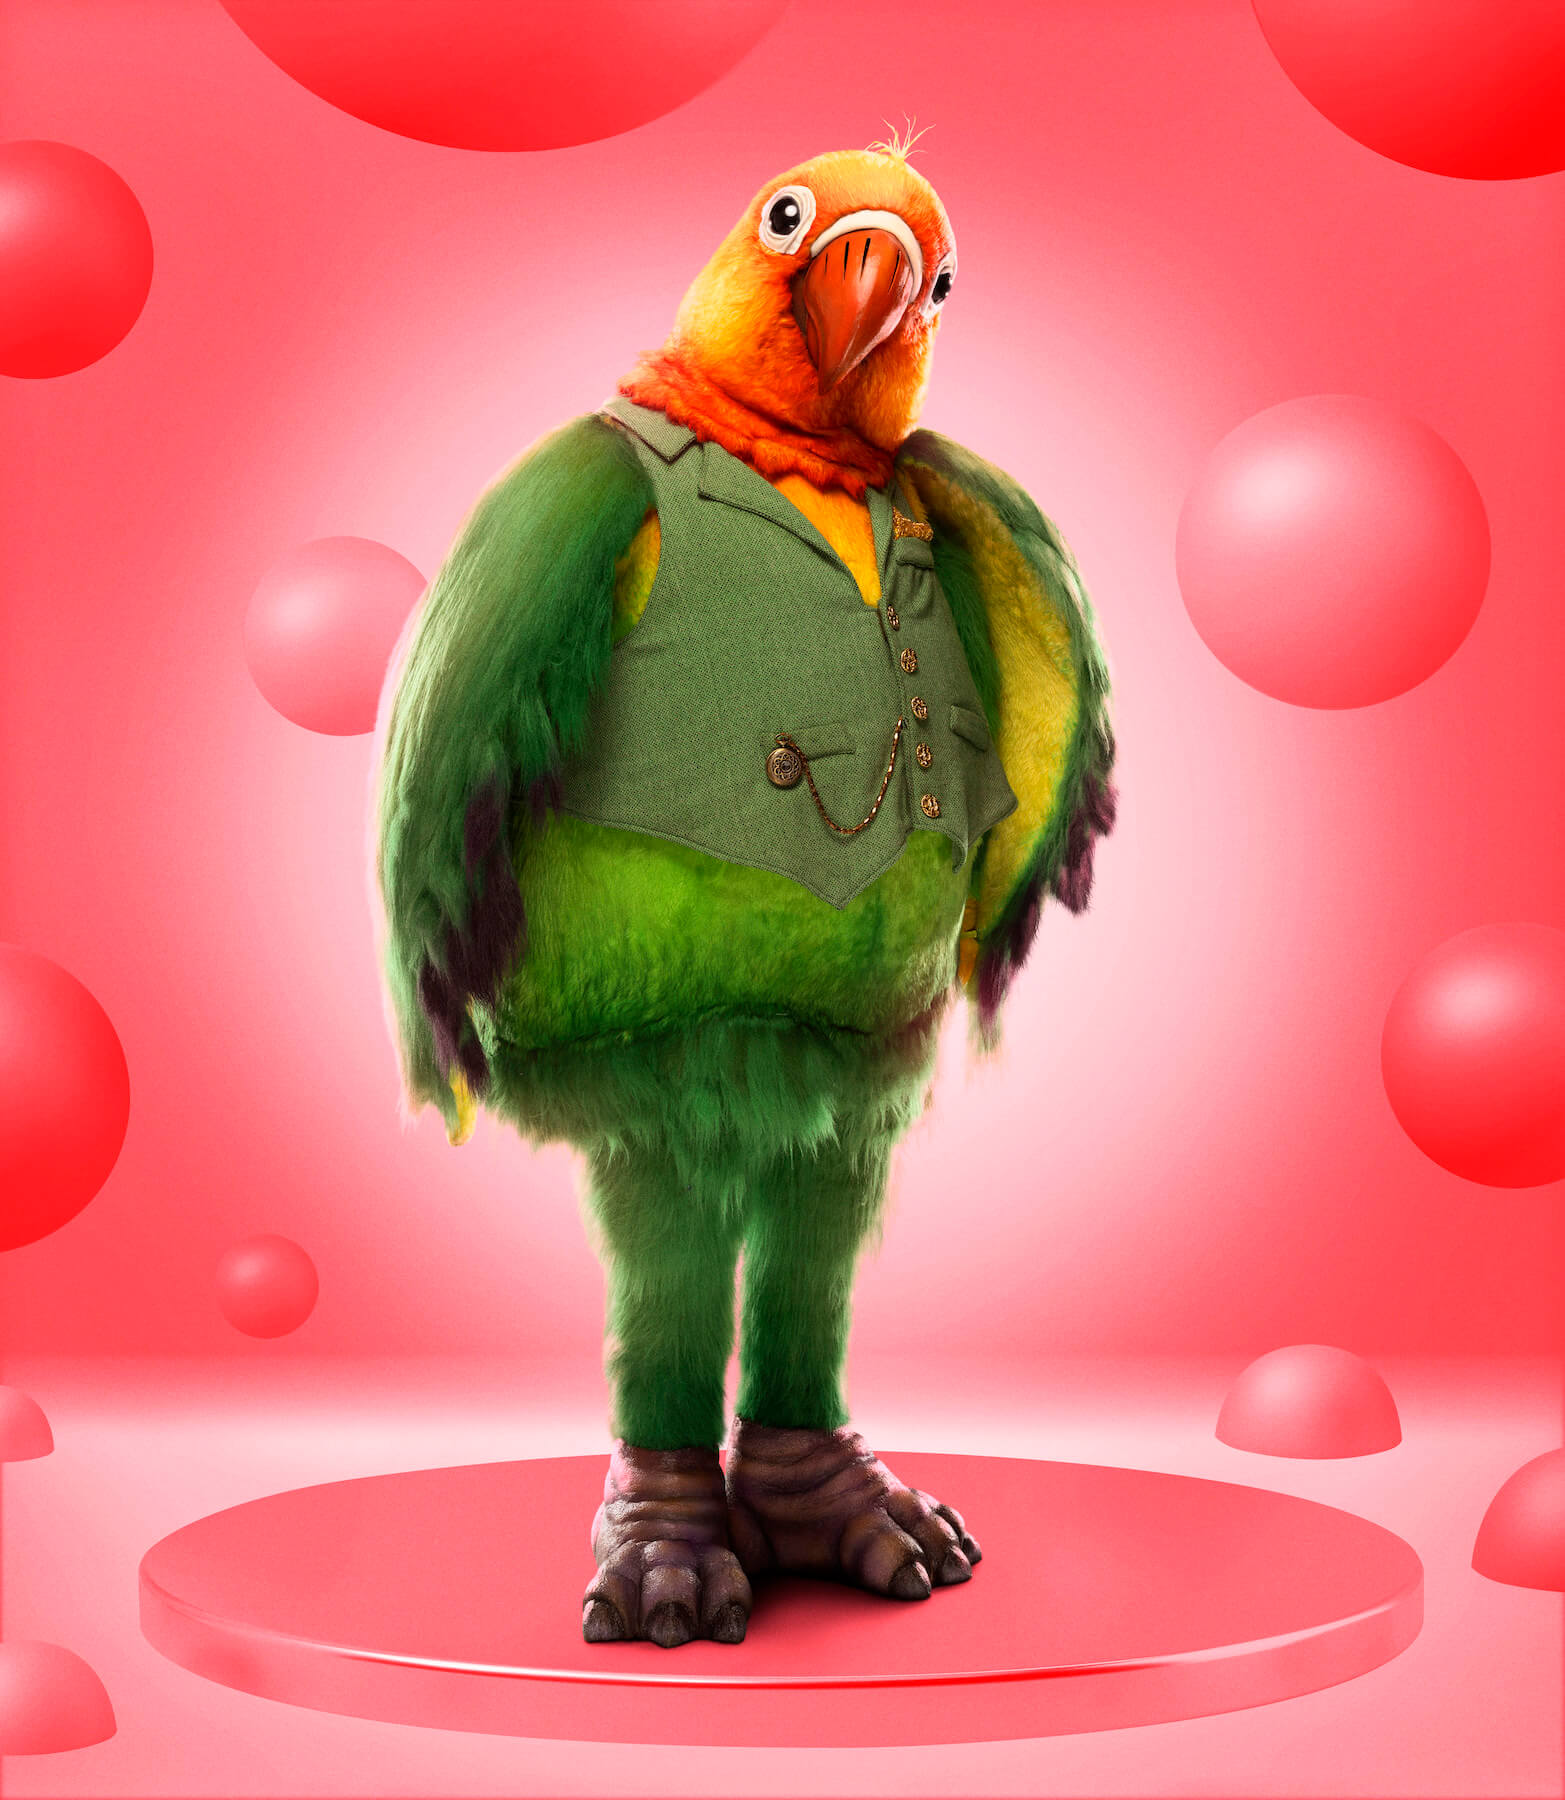 'The Masked Singer' Season 11 Lovebird mask against a red background